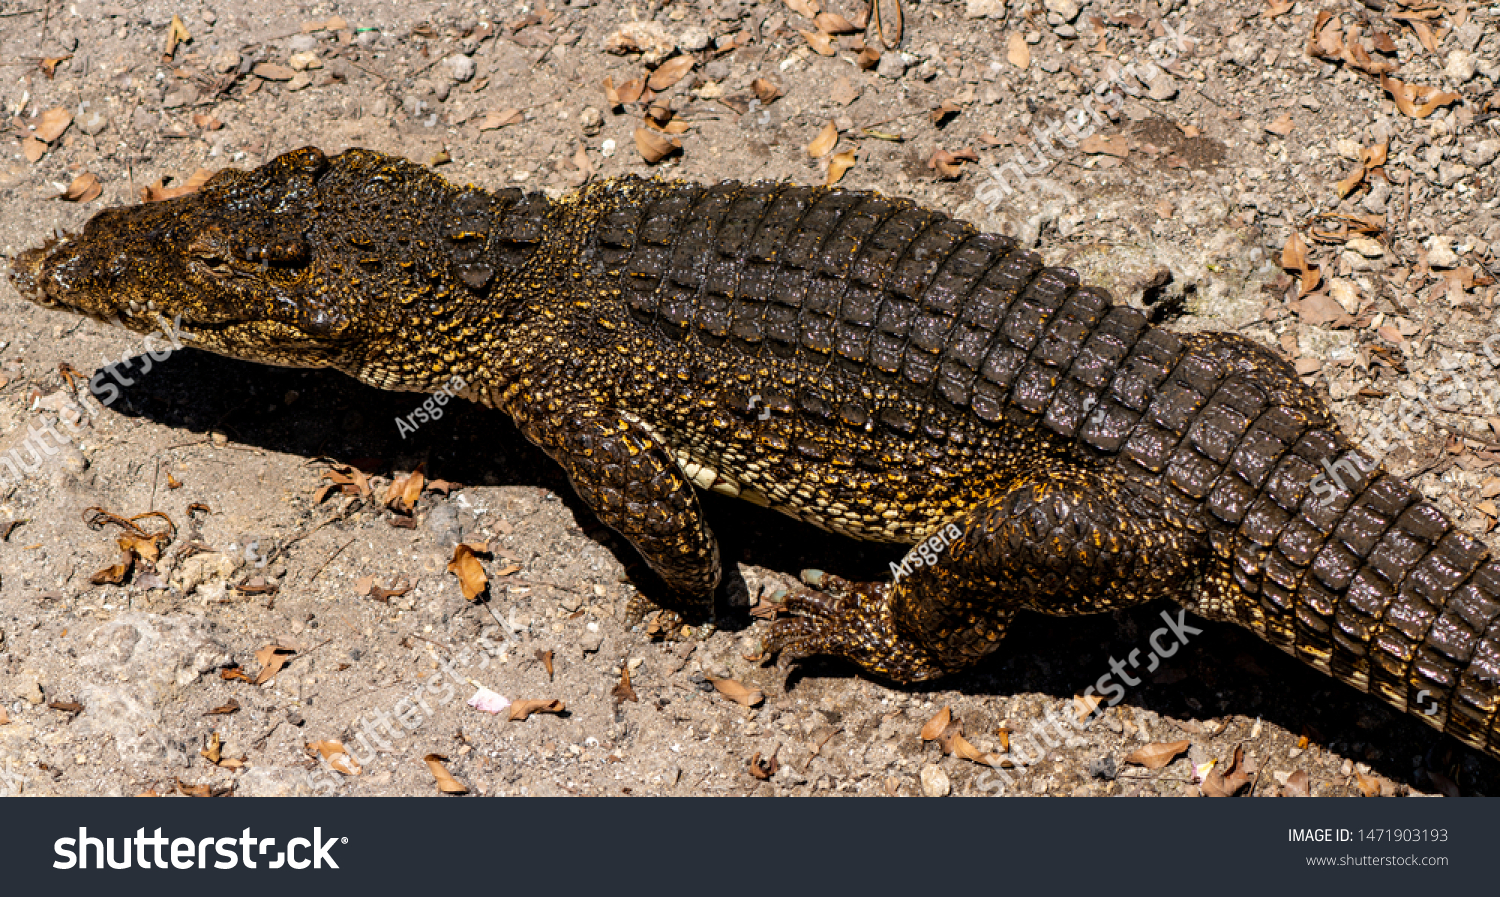 Crocodile or alligator close-up portrait. Wildlide and animal photos. Predators and reptiles #1471903193